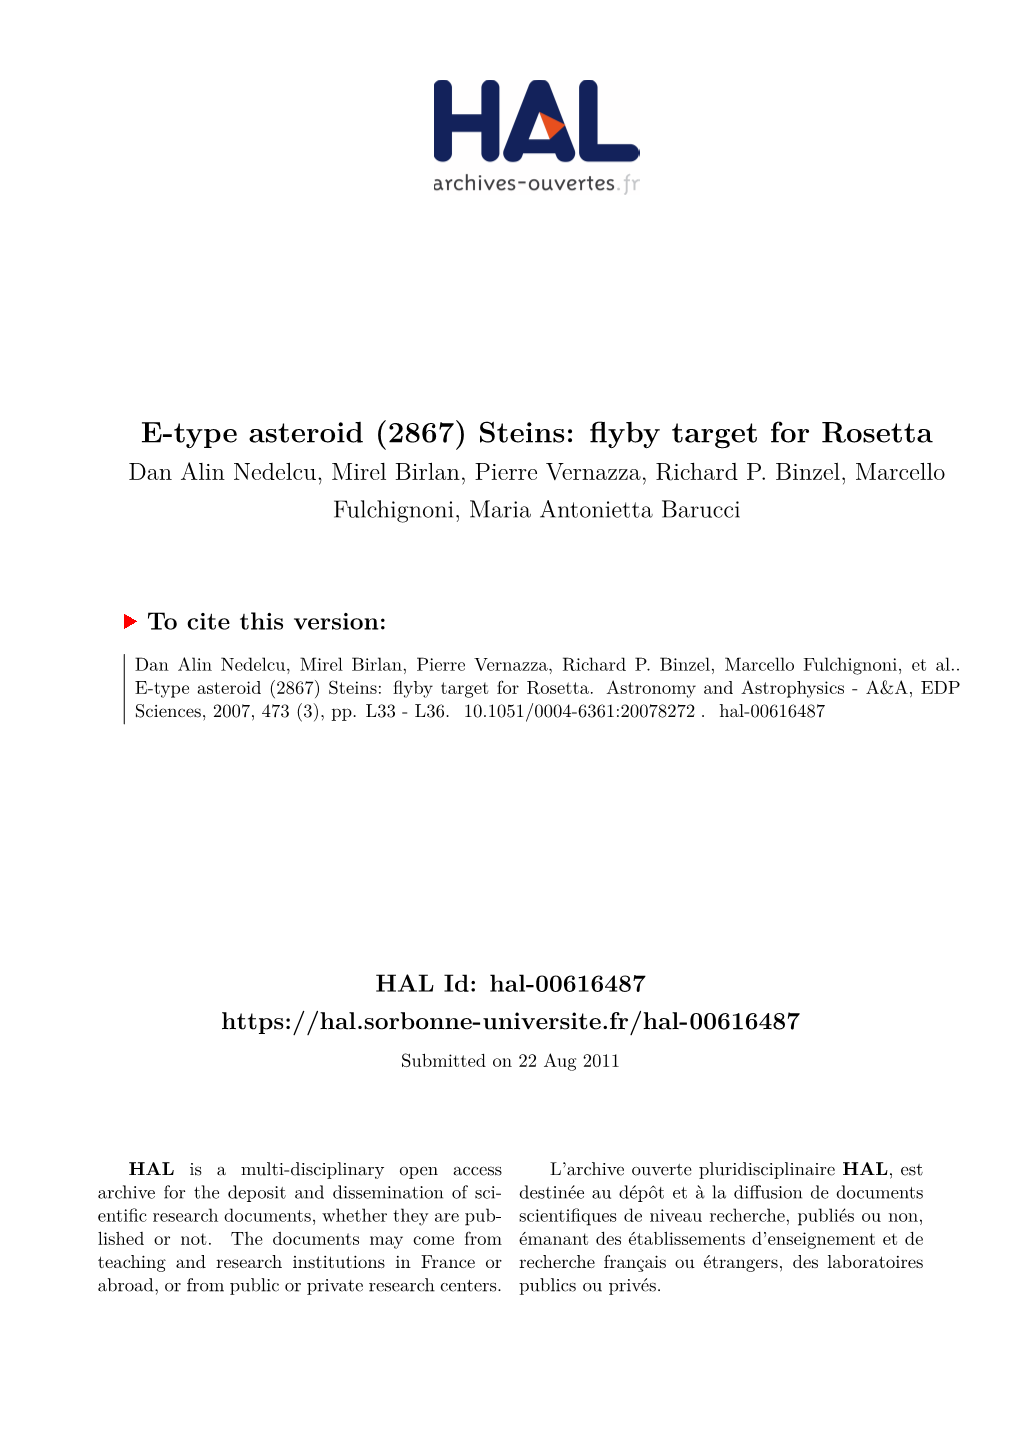 (2867) Steins: Flyby Target for Rosetta Dan Alin Nedelcu, Mirel Birlan, Pierre Vernazza, Richard P